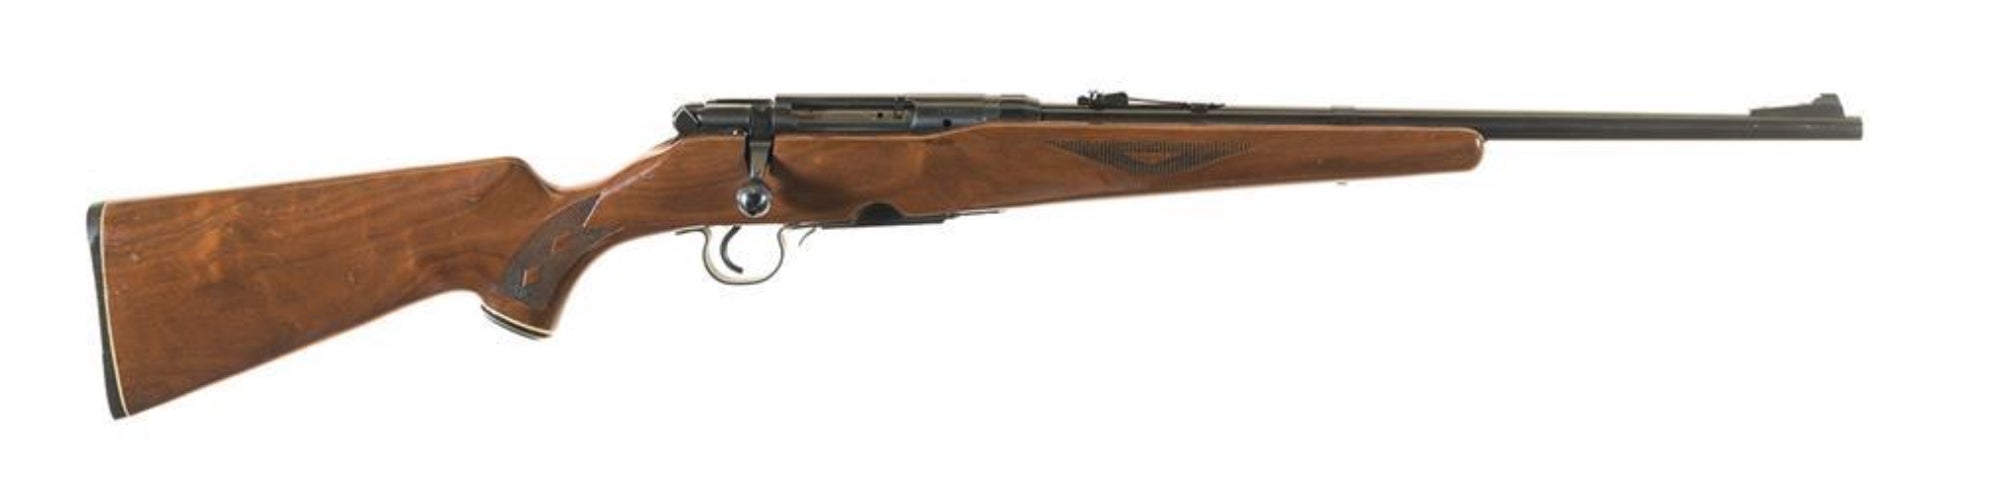 photo of Savage 340 rifle